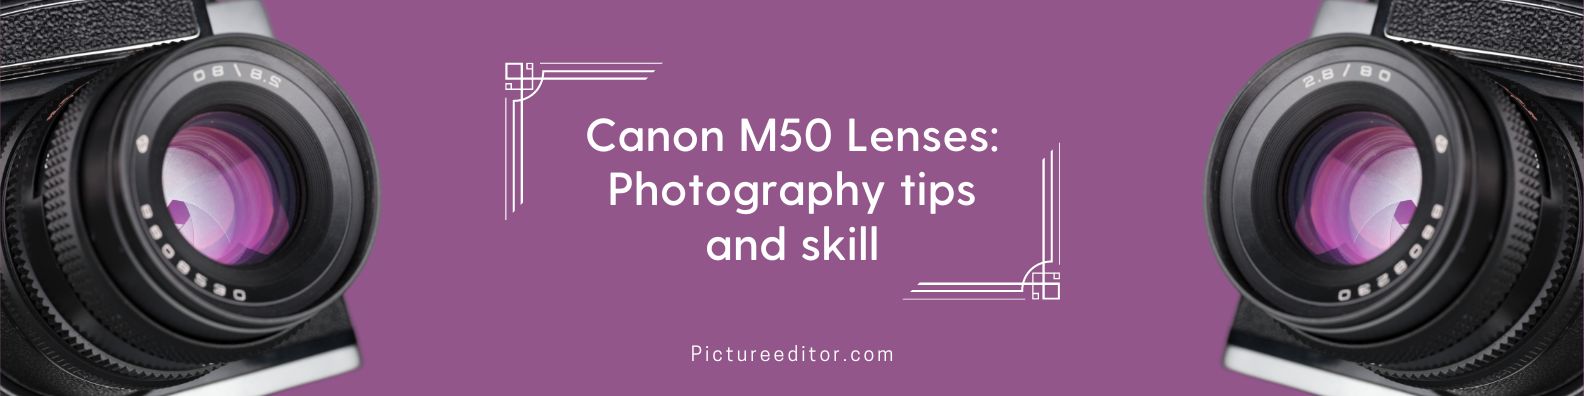 Canon M50 Lenses